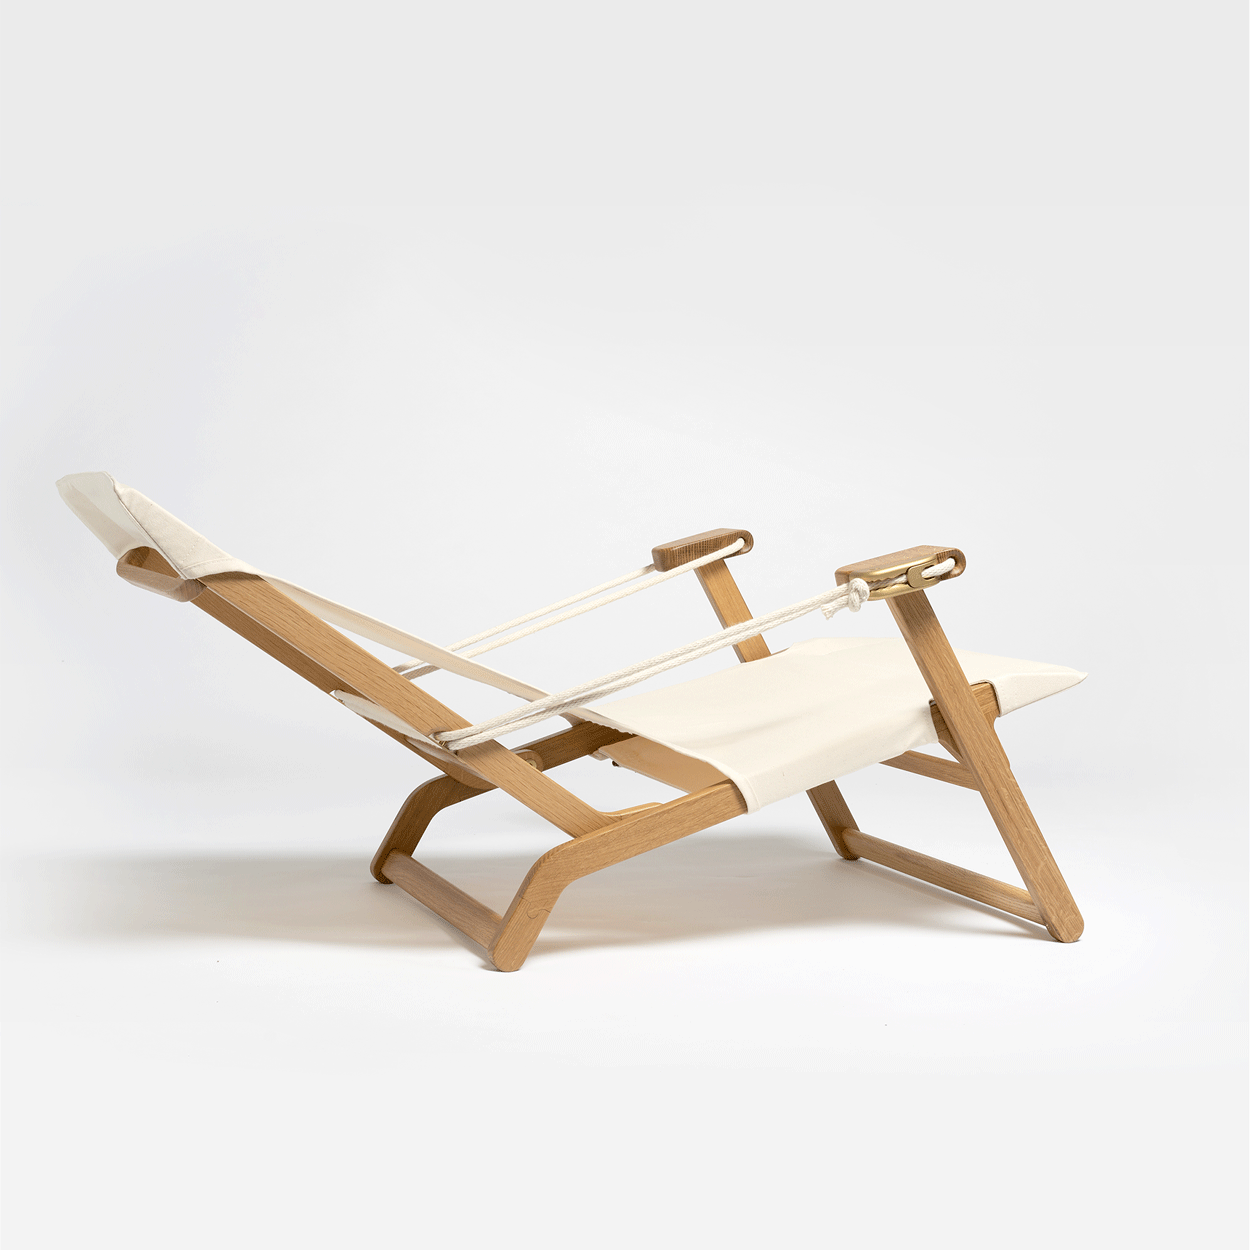 Shorebird Beach Chair reclining using its custom recline system